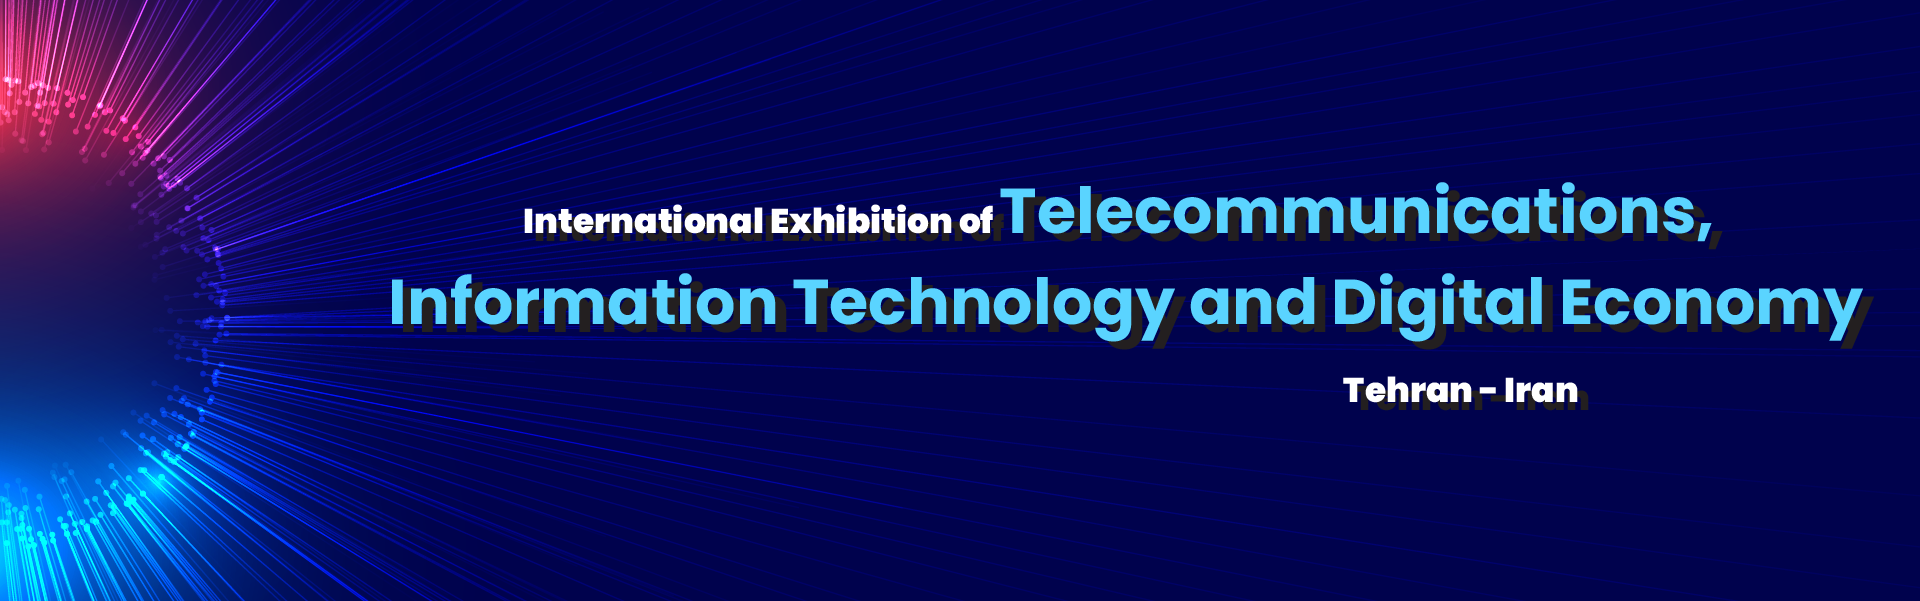 Telecommunications information and communication technology Exhibition of Iran